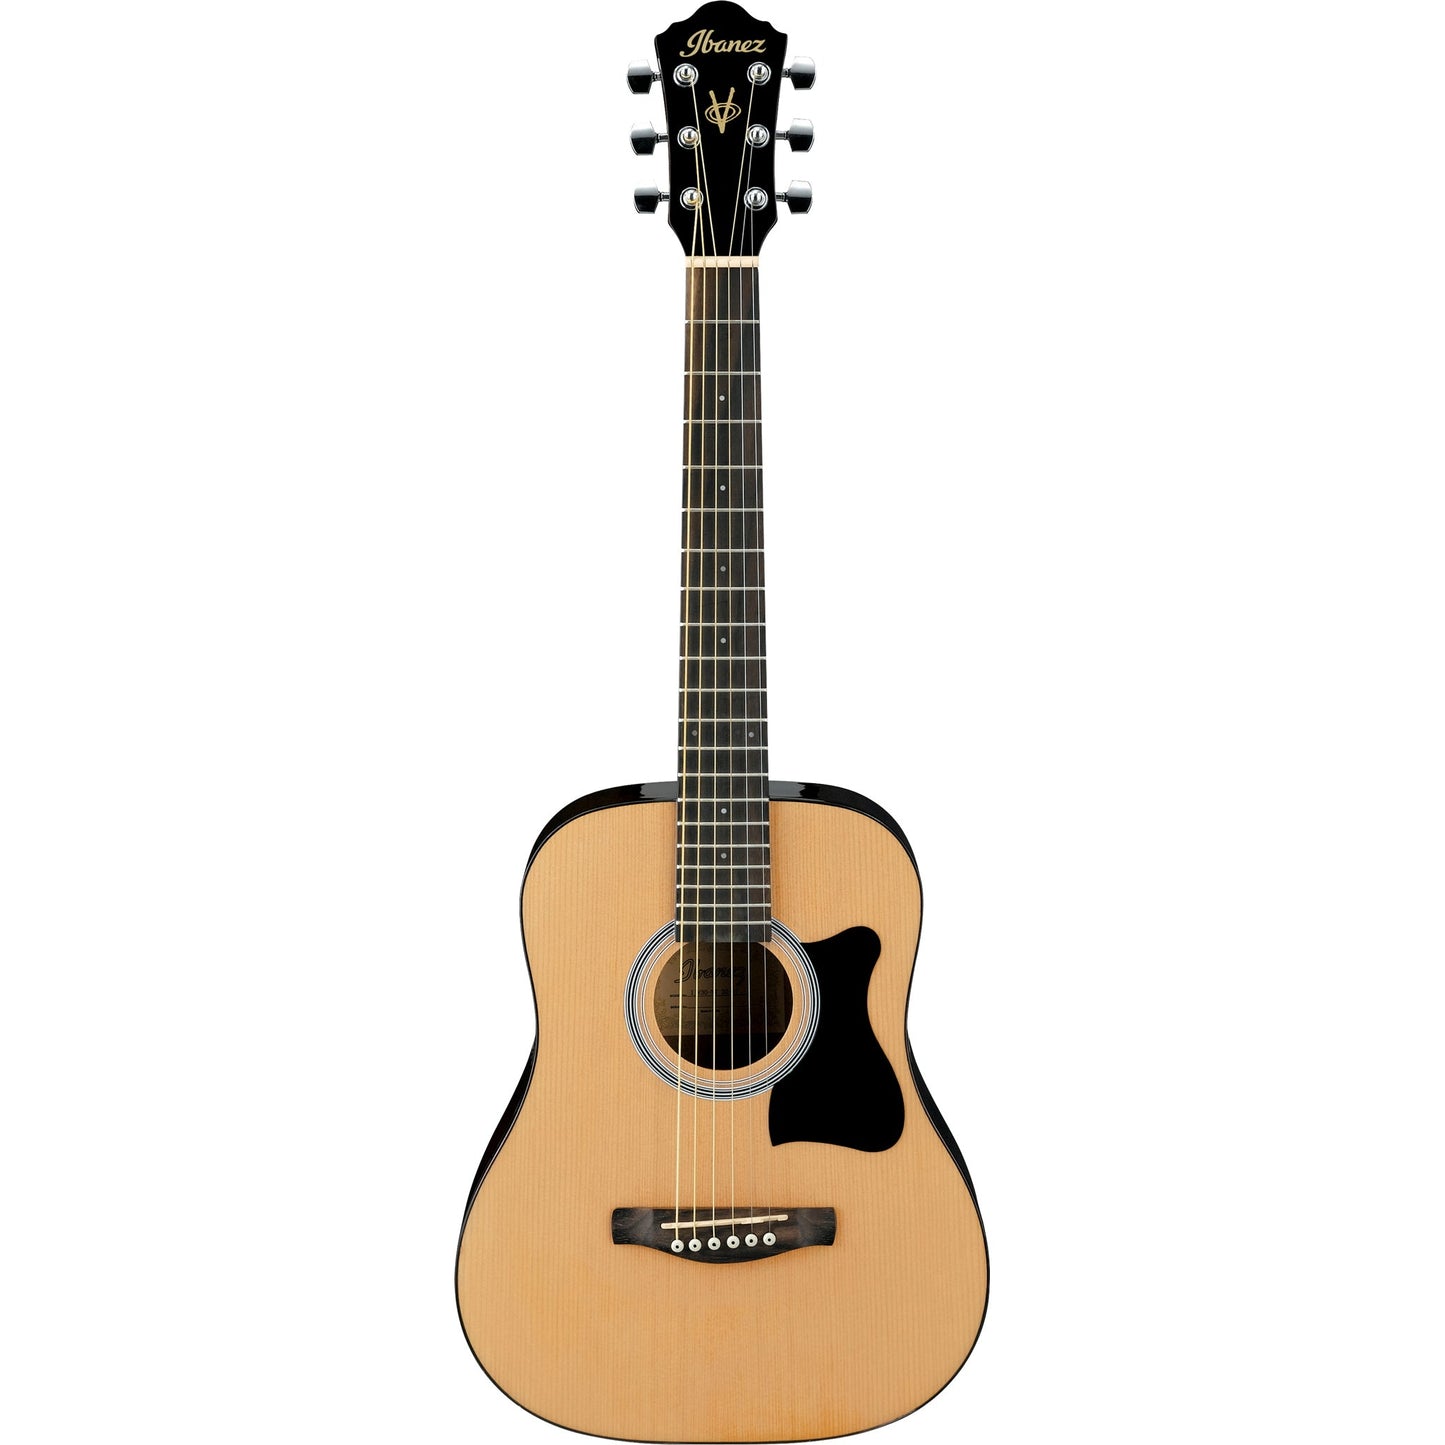 Ibanez IJV30 Jampack Acoustic Guitar Package - 3/4 Size Dreadnought Guitar (Natural)